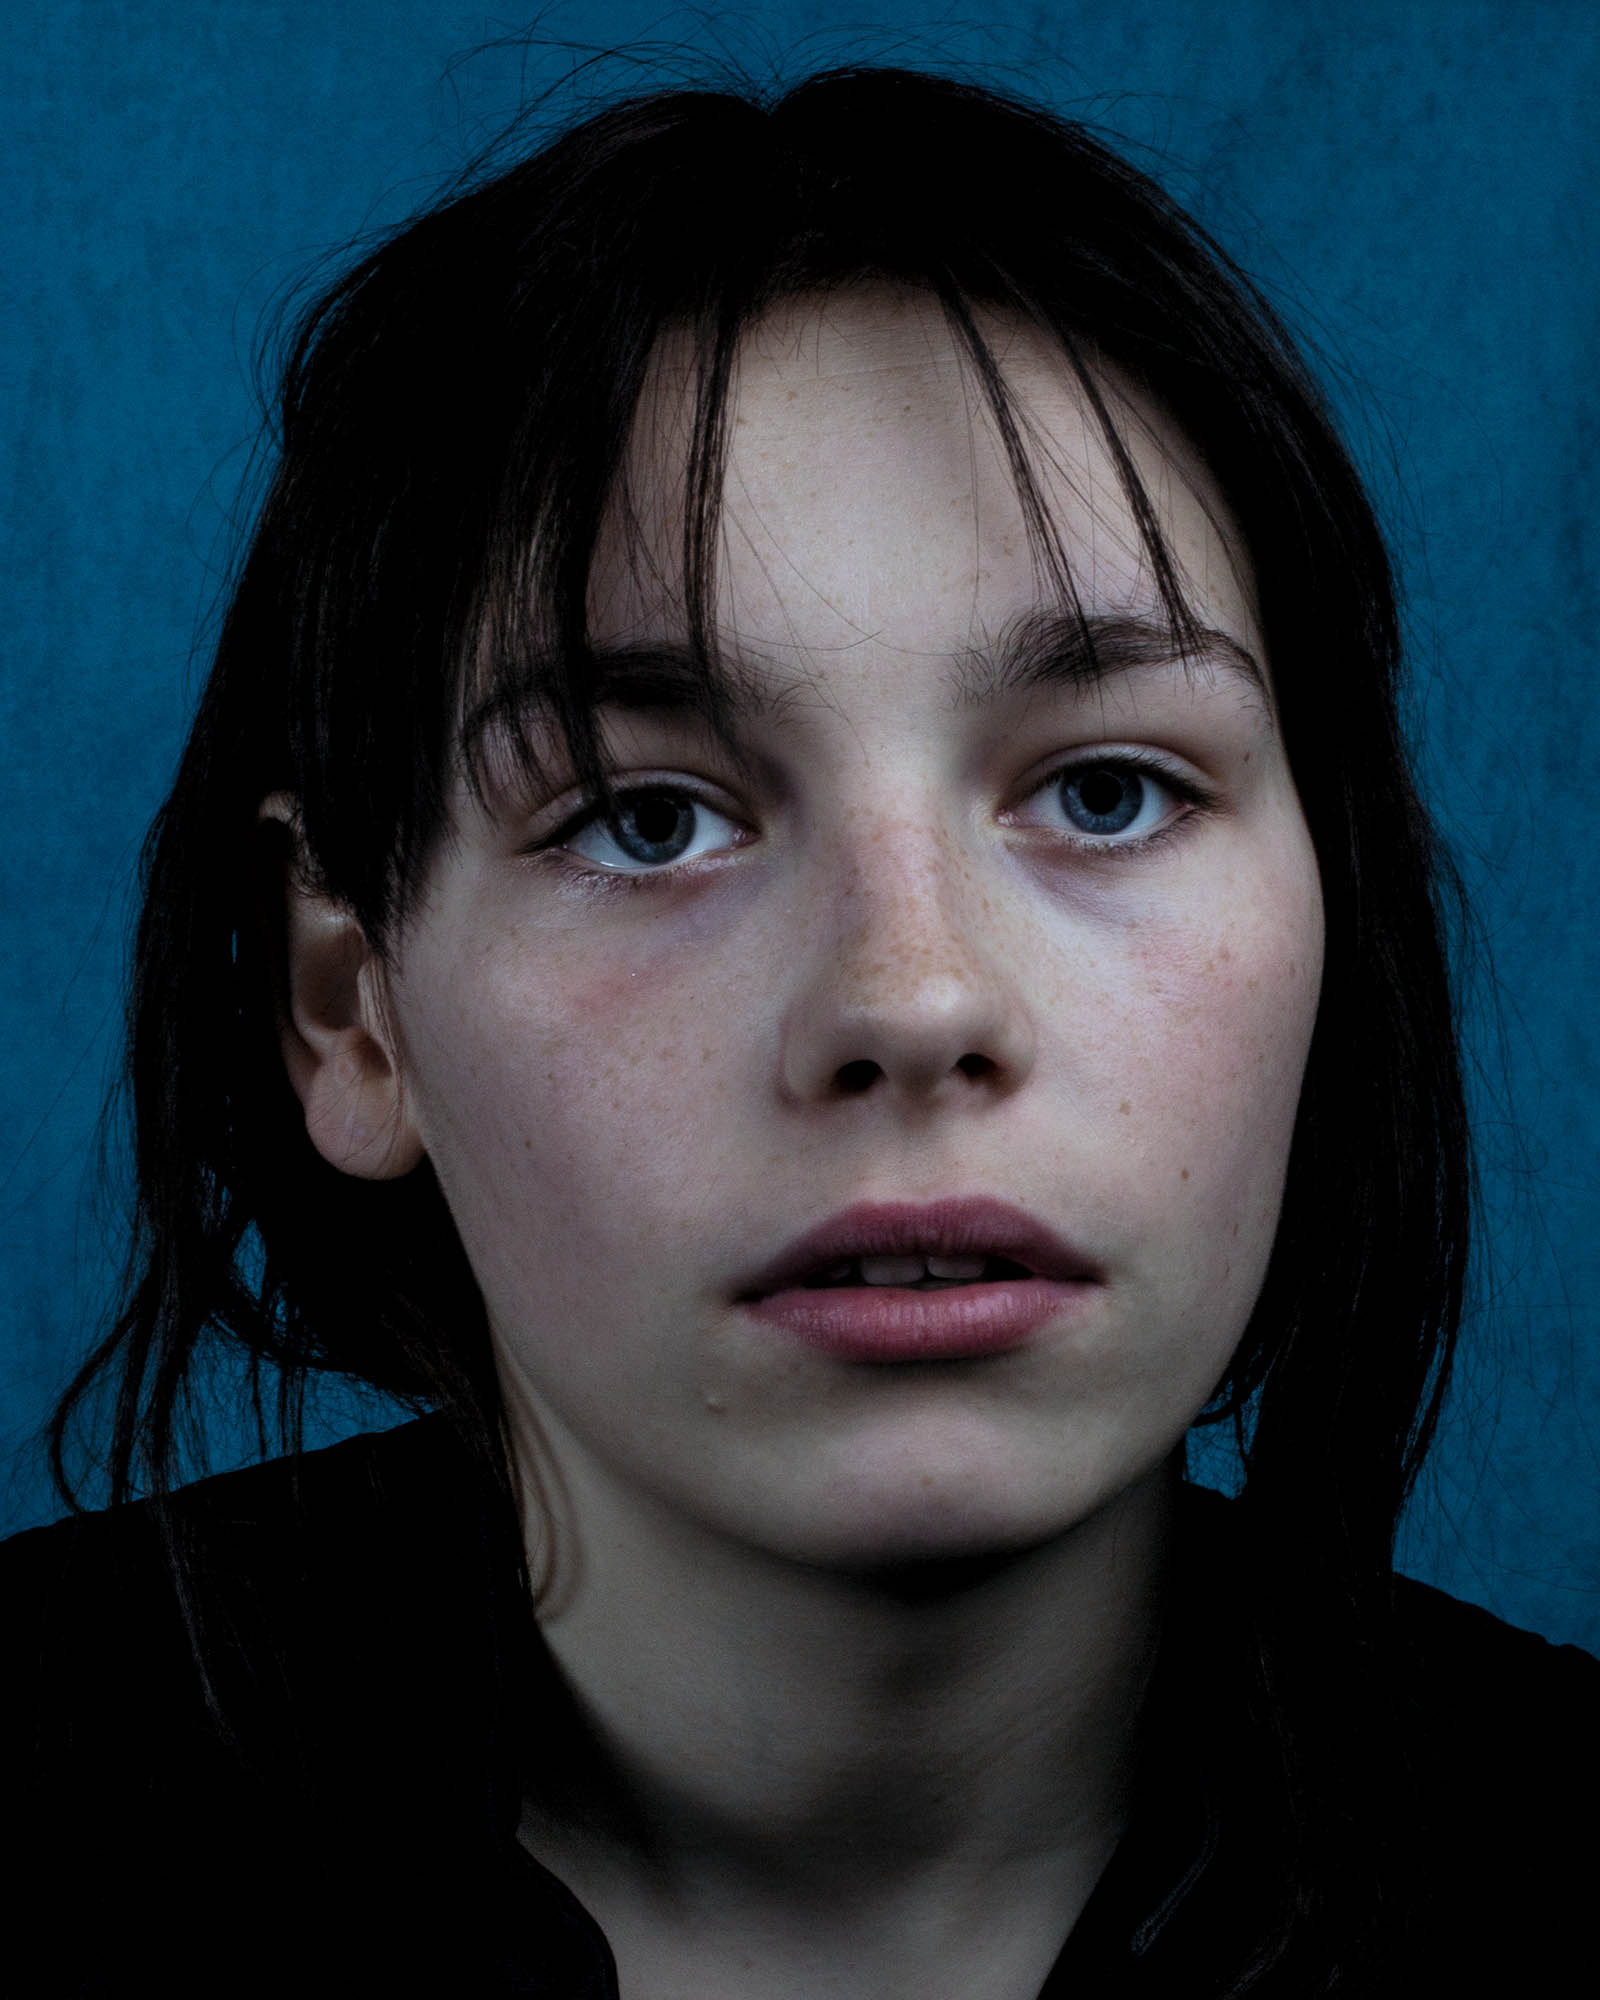 a portrait of a young woman's face against a blue backdrop